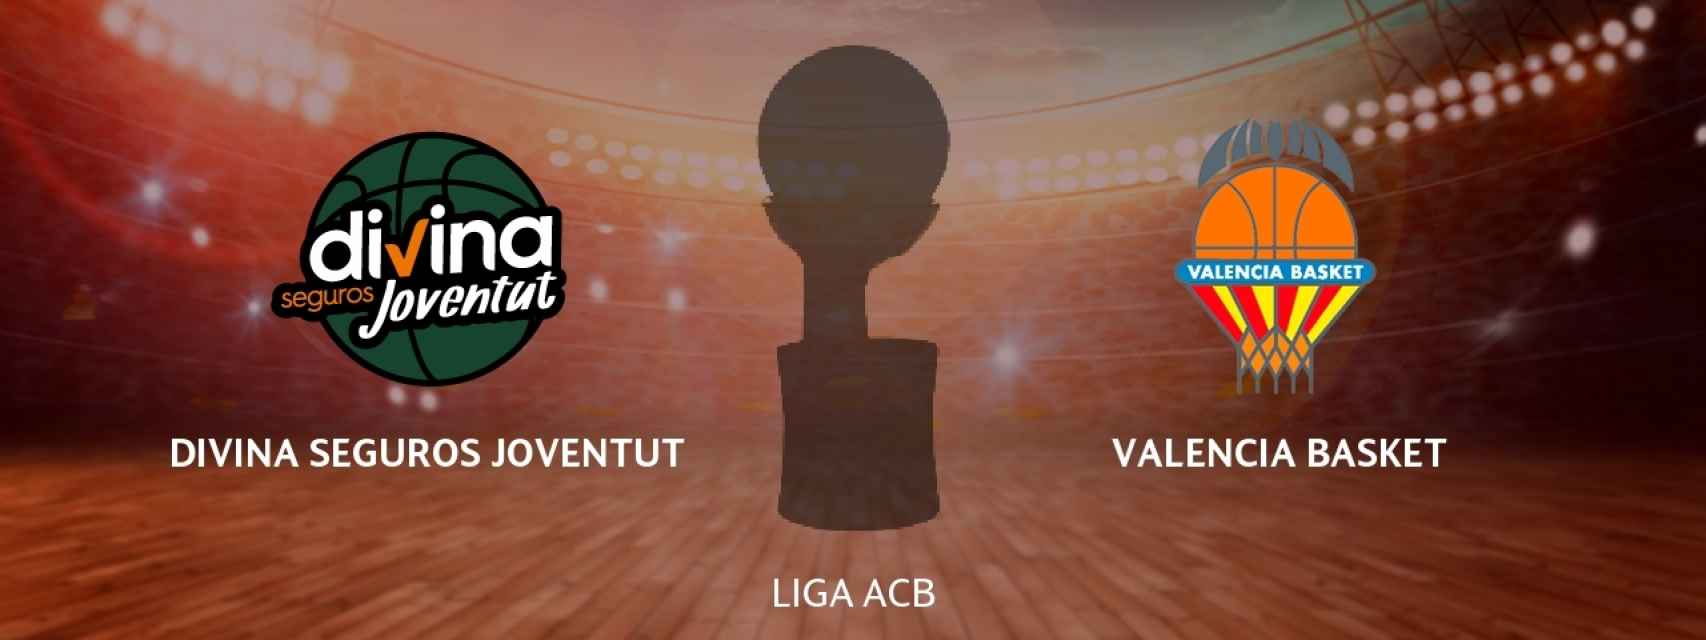 Divina Seguros Joventut - Valencia Basket